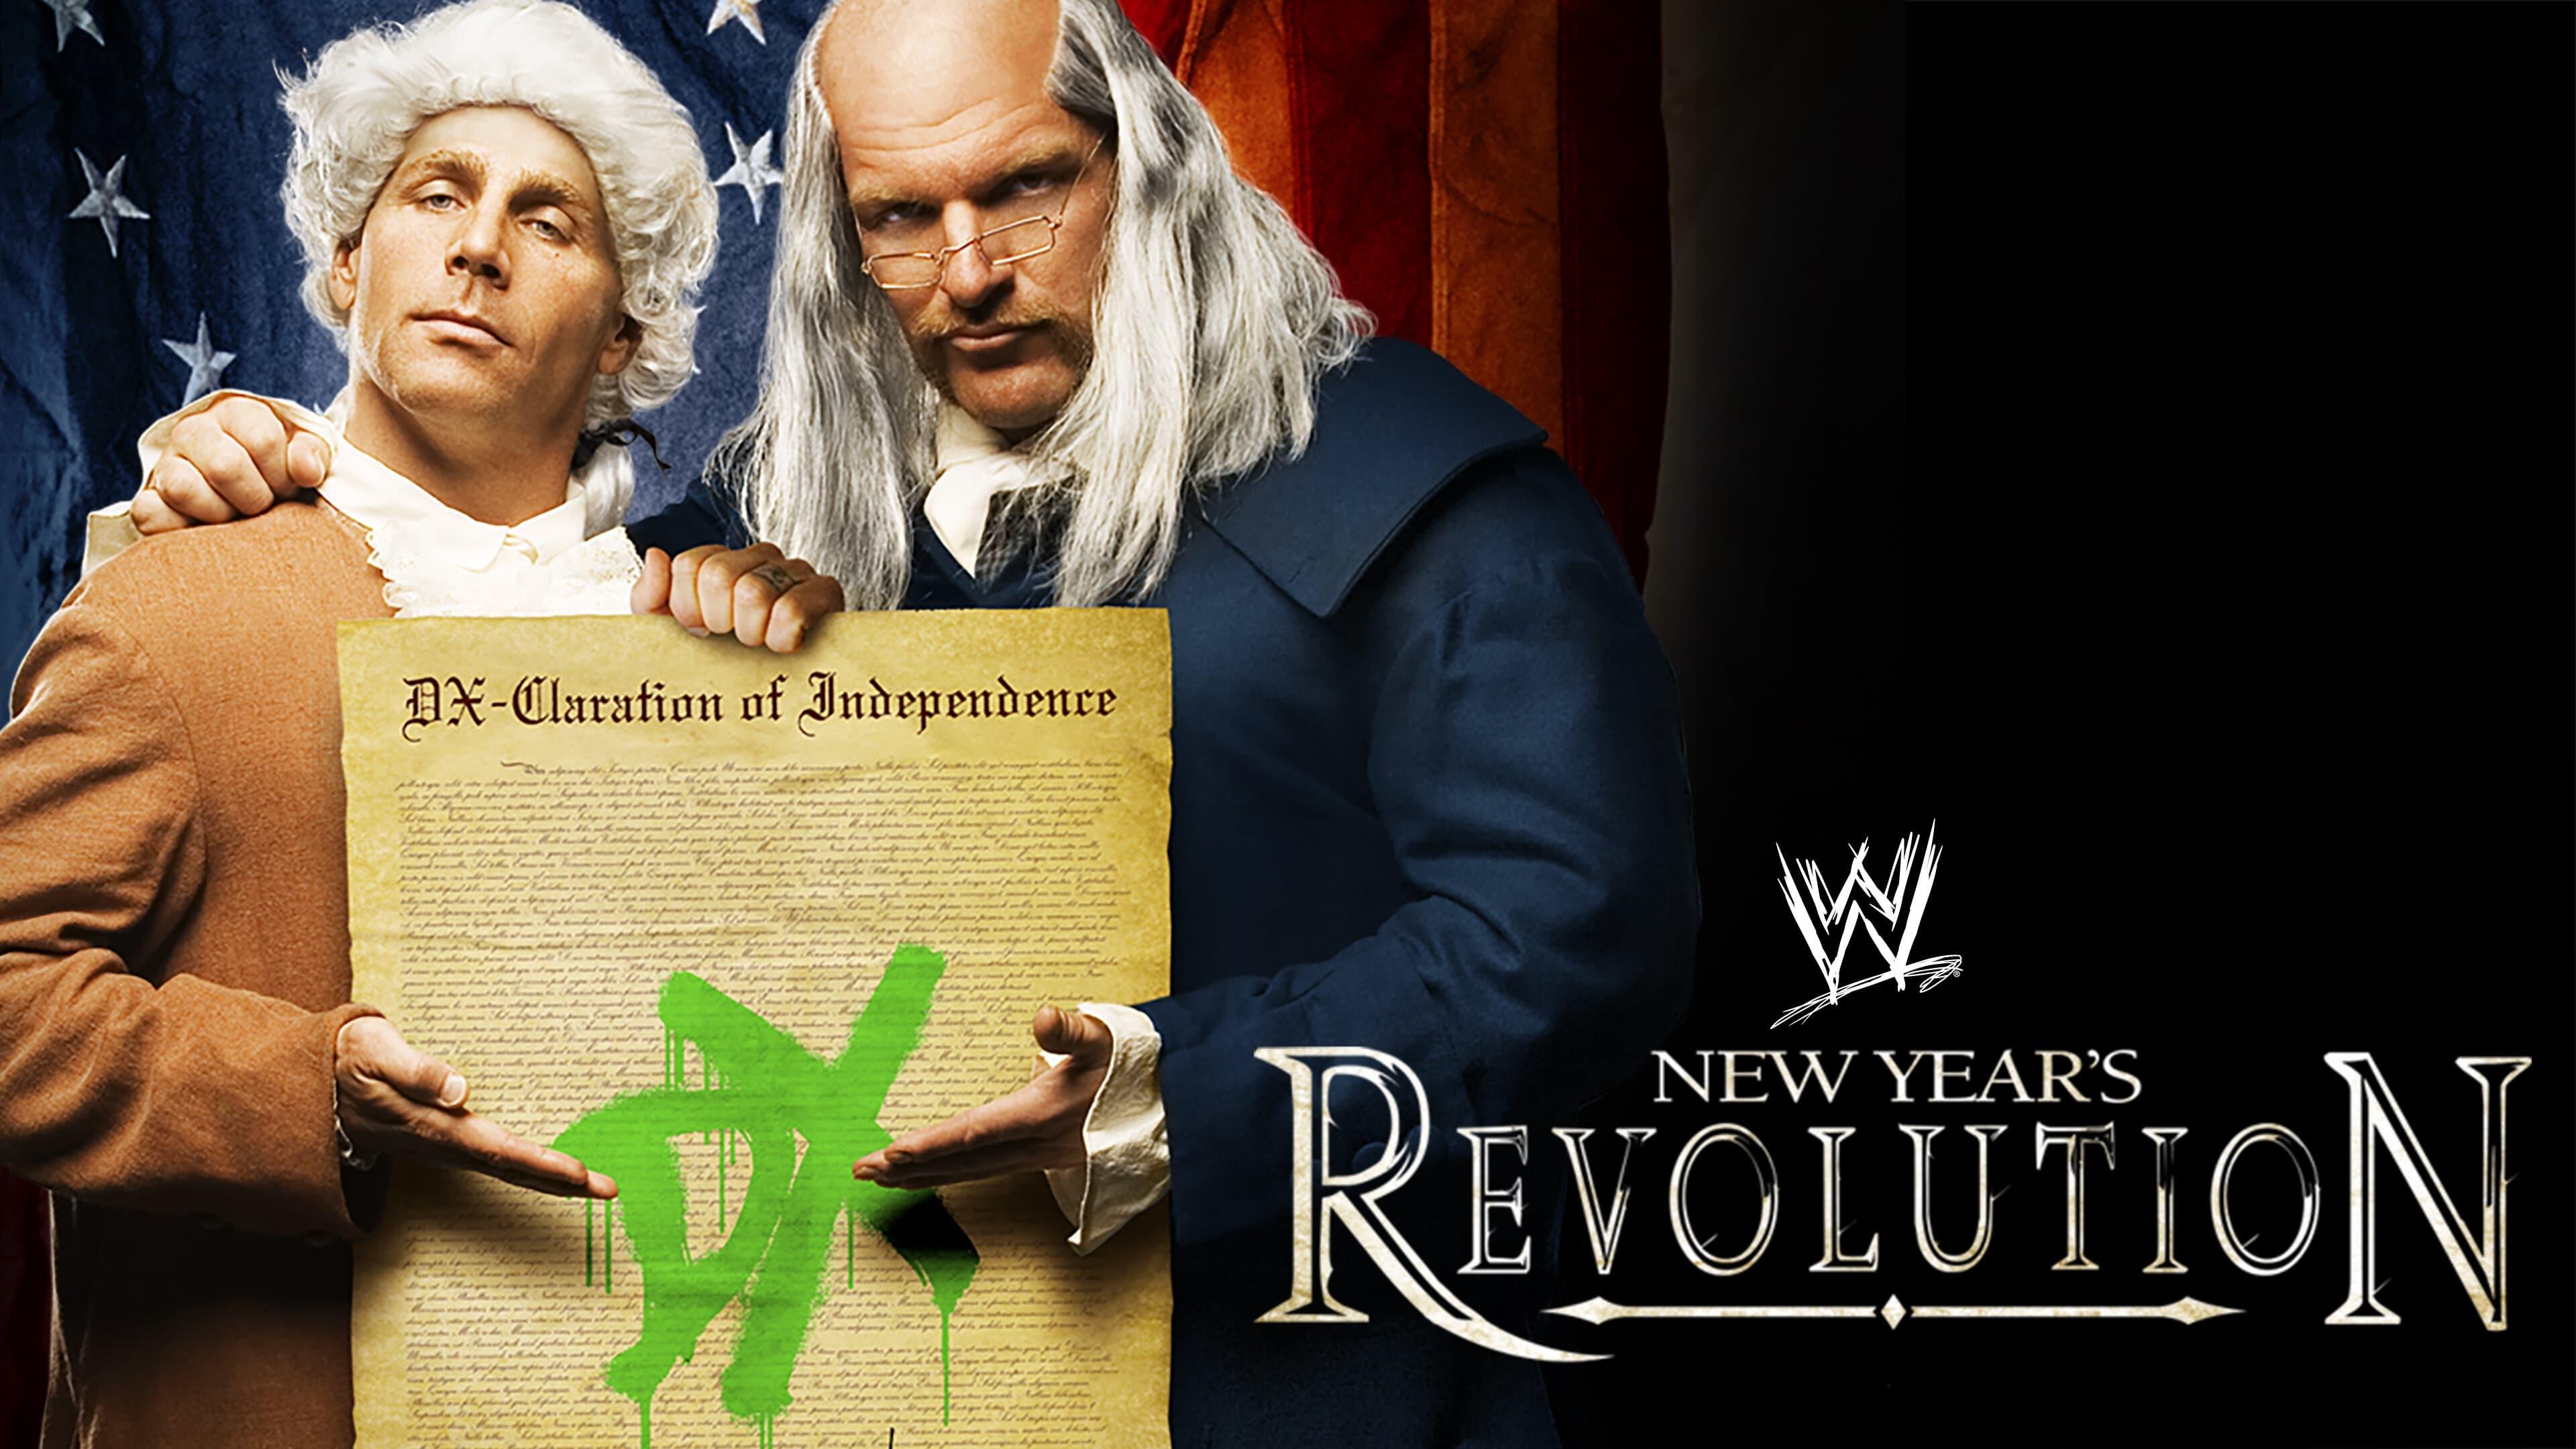 WWE New Year's Revolution 2007 backdrop